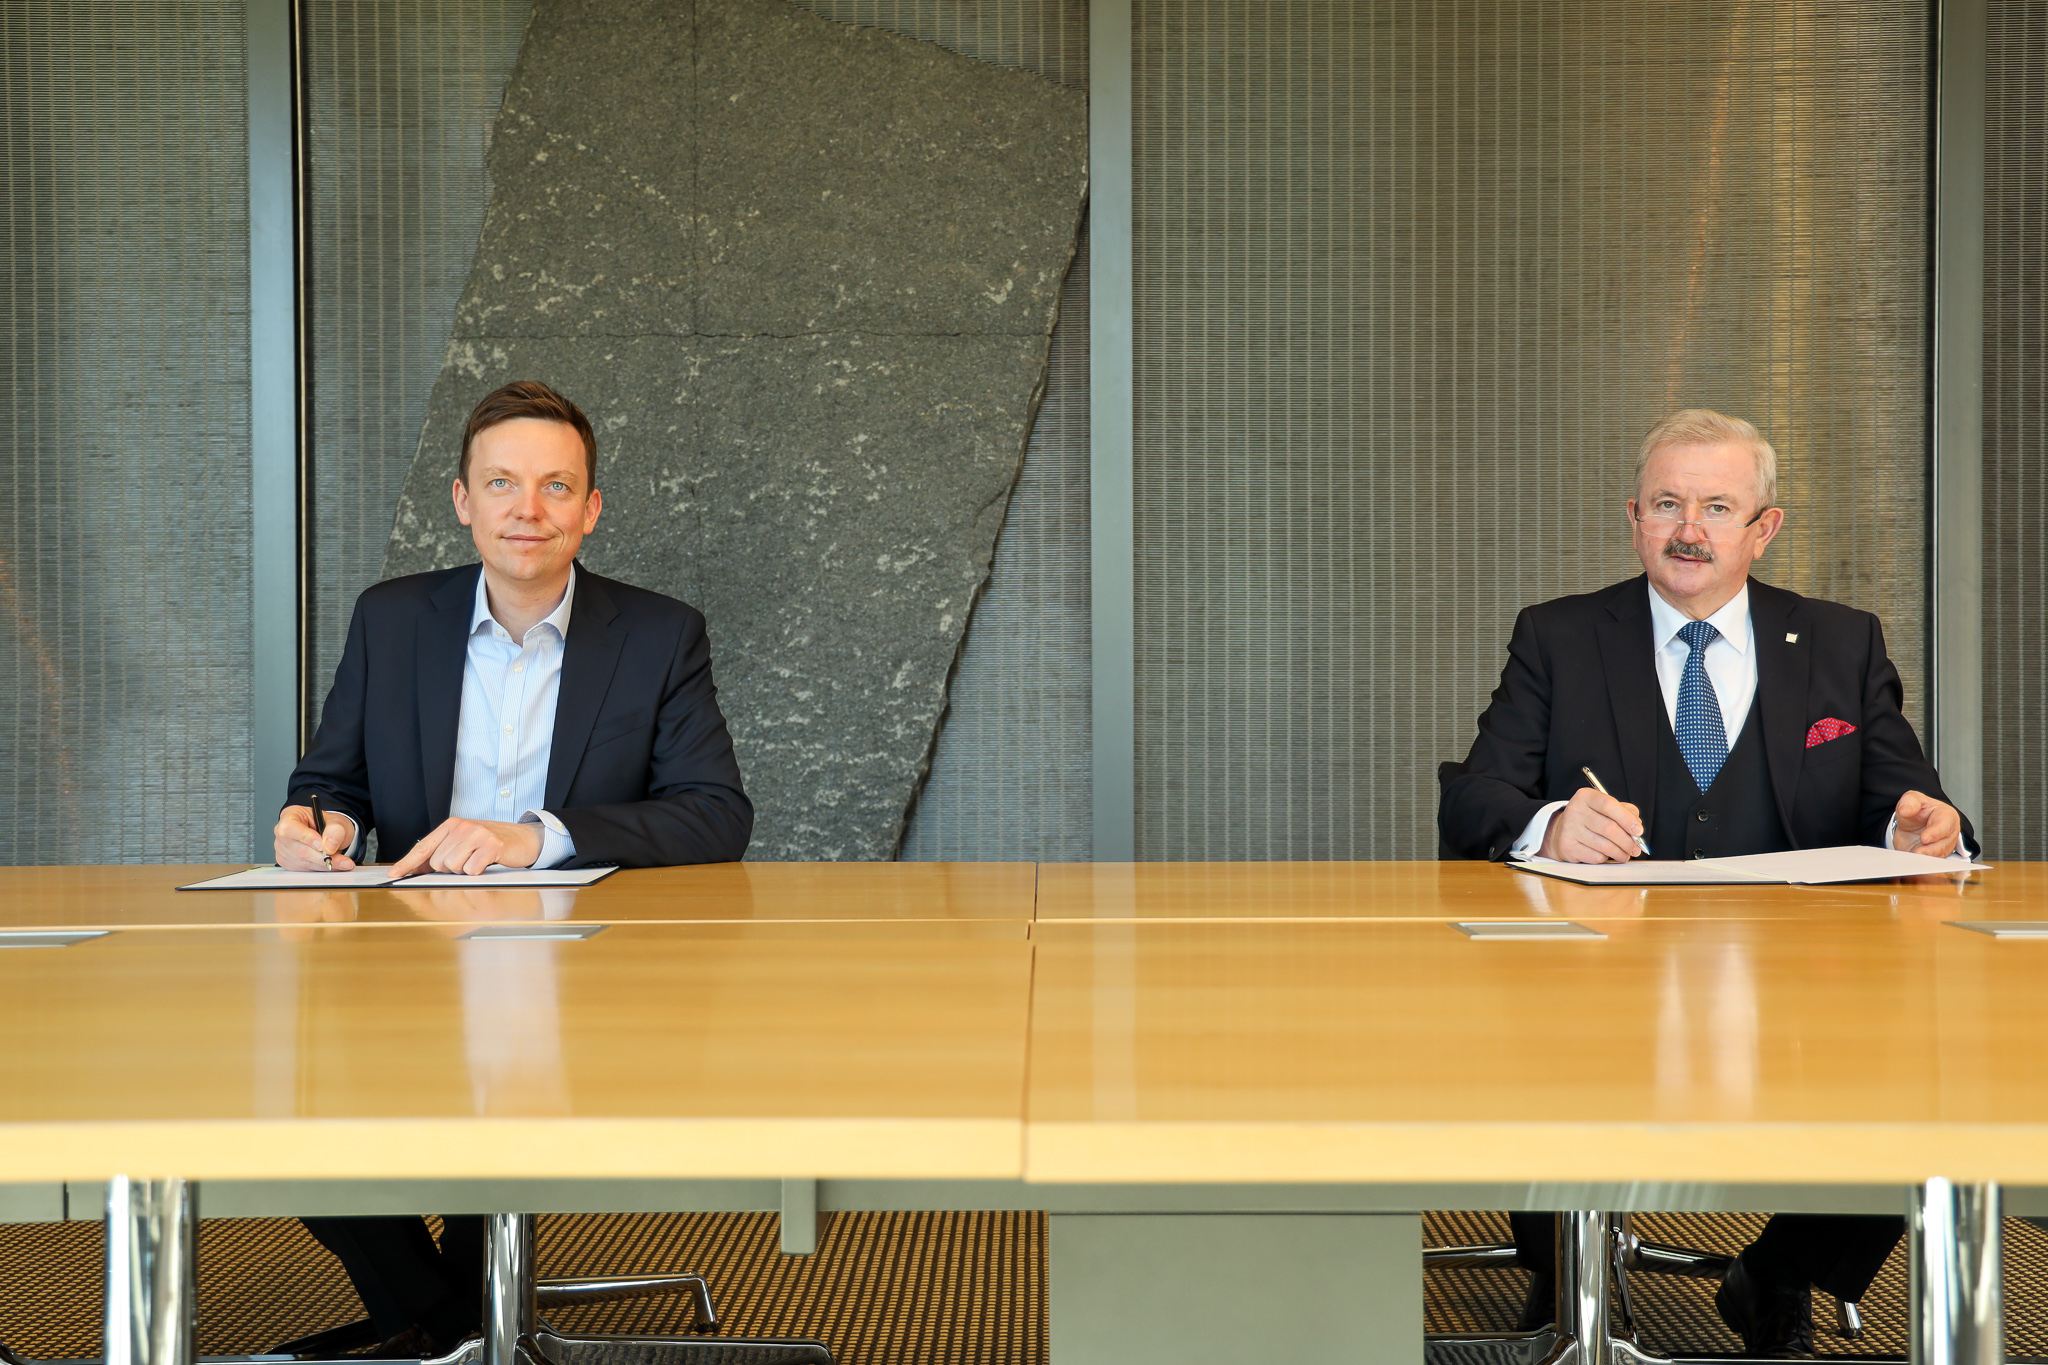 Saarland’s Minister President Tobias Hans and the President of the Fraunhofer-Gesellschaft, Prof. Reimund Neugebauer, signed an agreement today to establish the Fraunhofer Center for Sensor Intelligence.